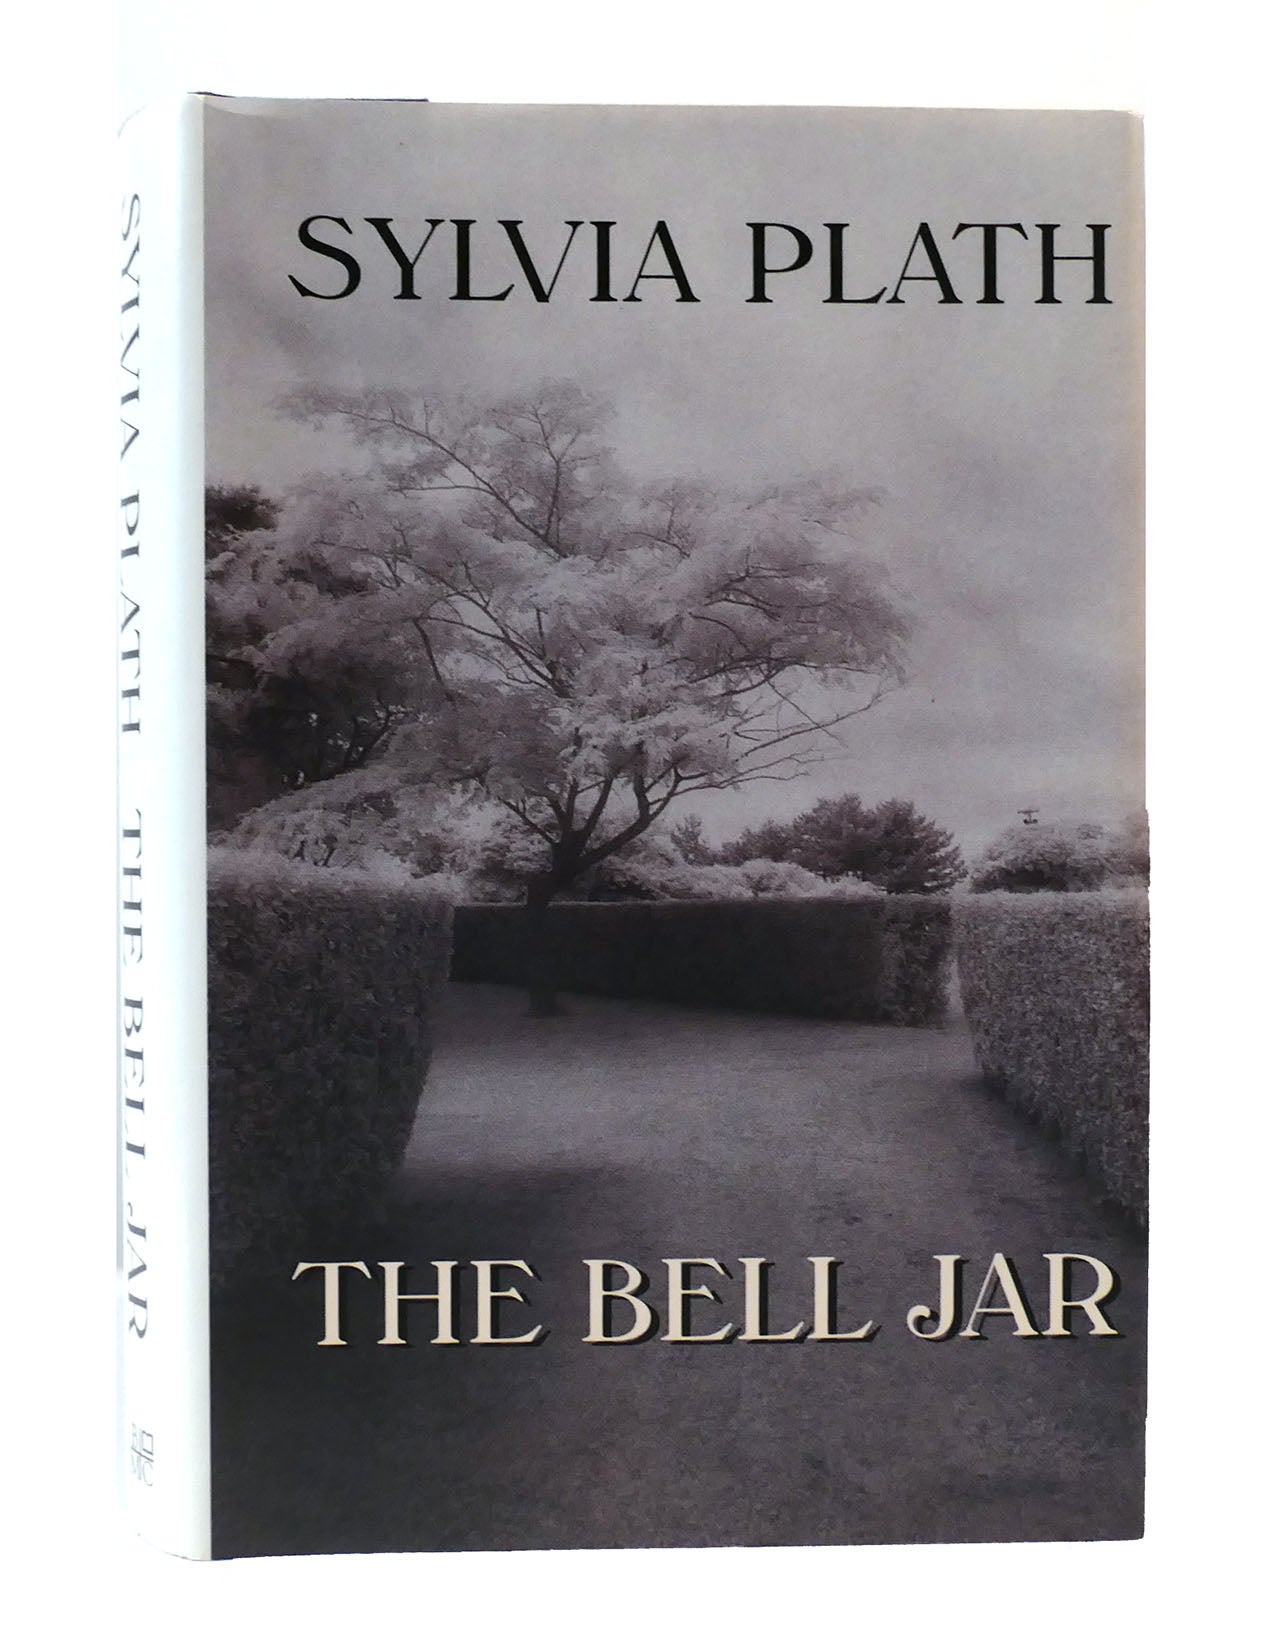 THE BELL JAR, Sylvia Plath